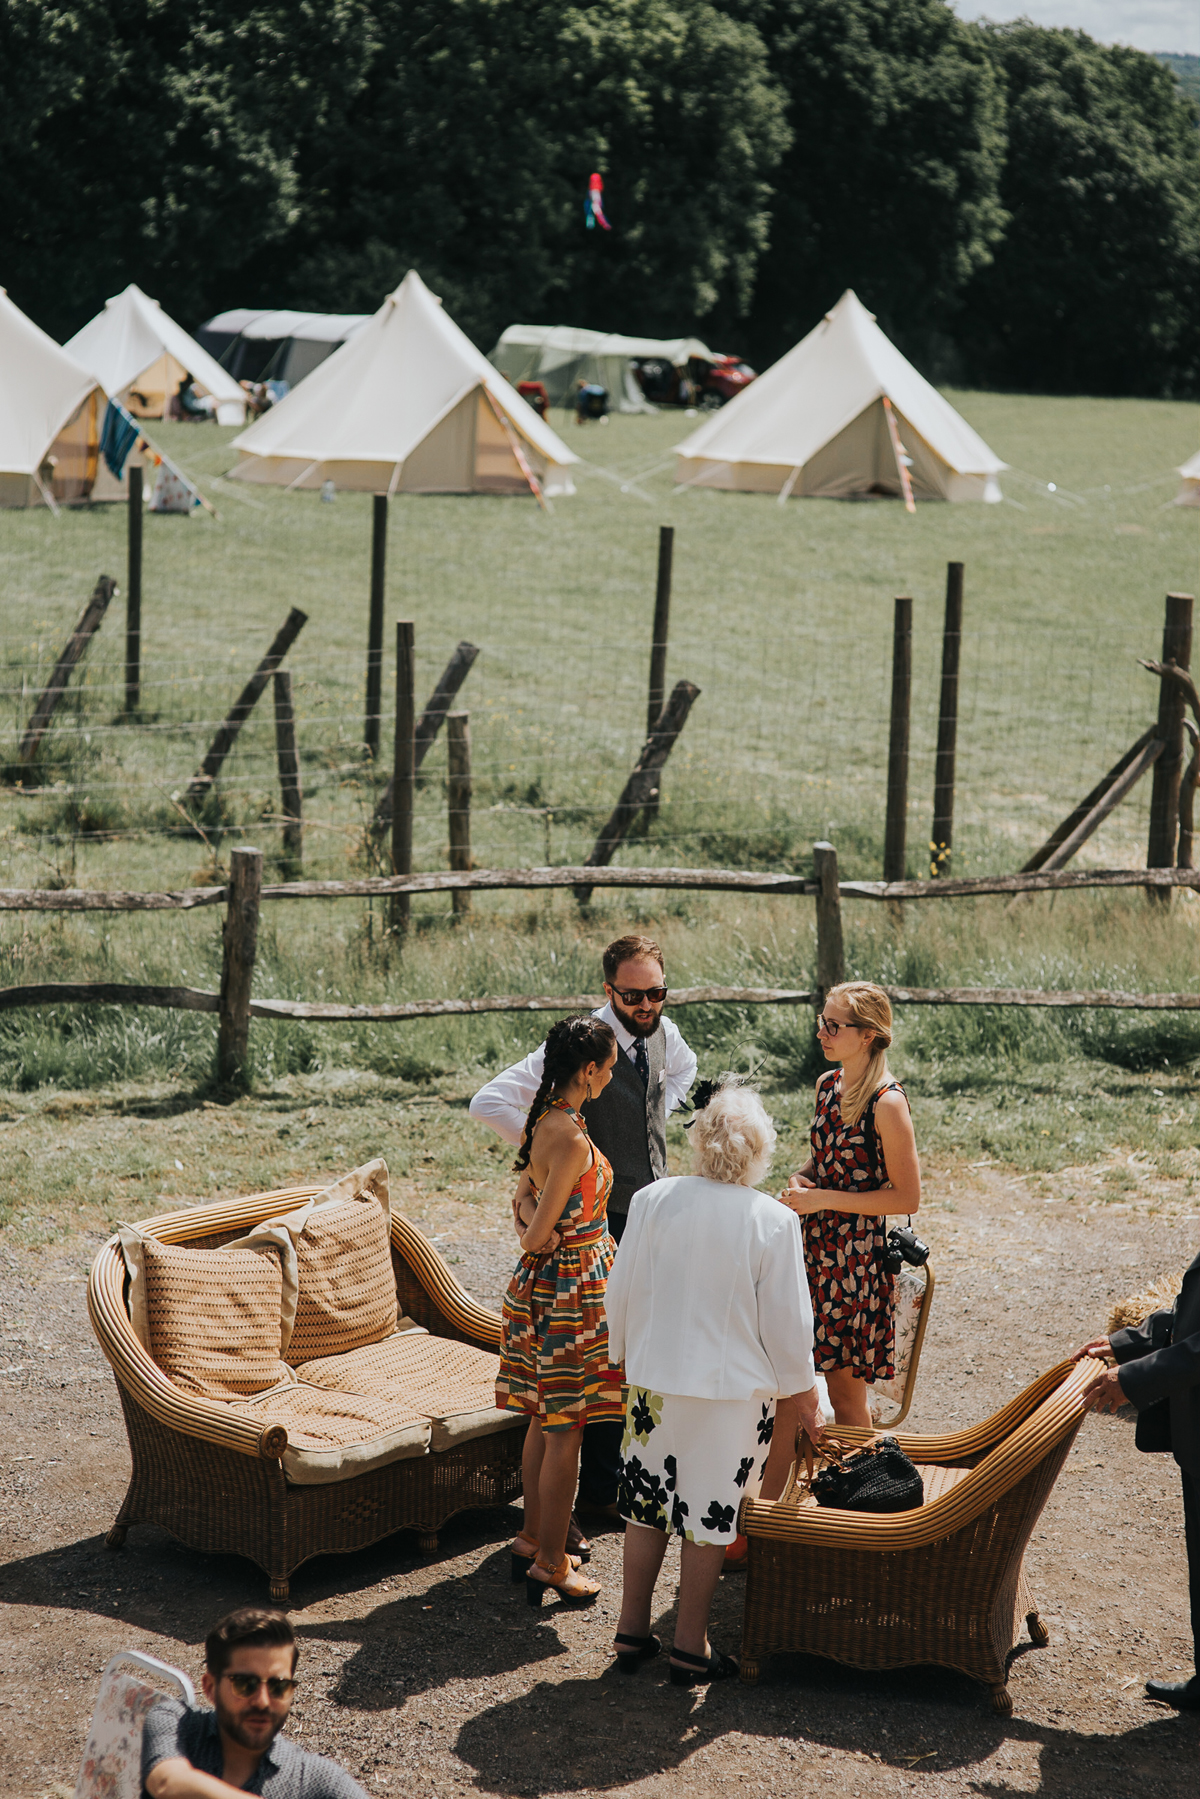 31 A cool festival inspired wedding on a farm